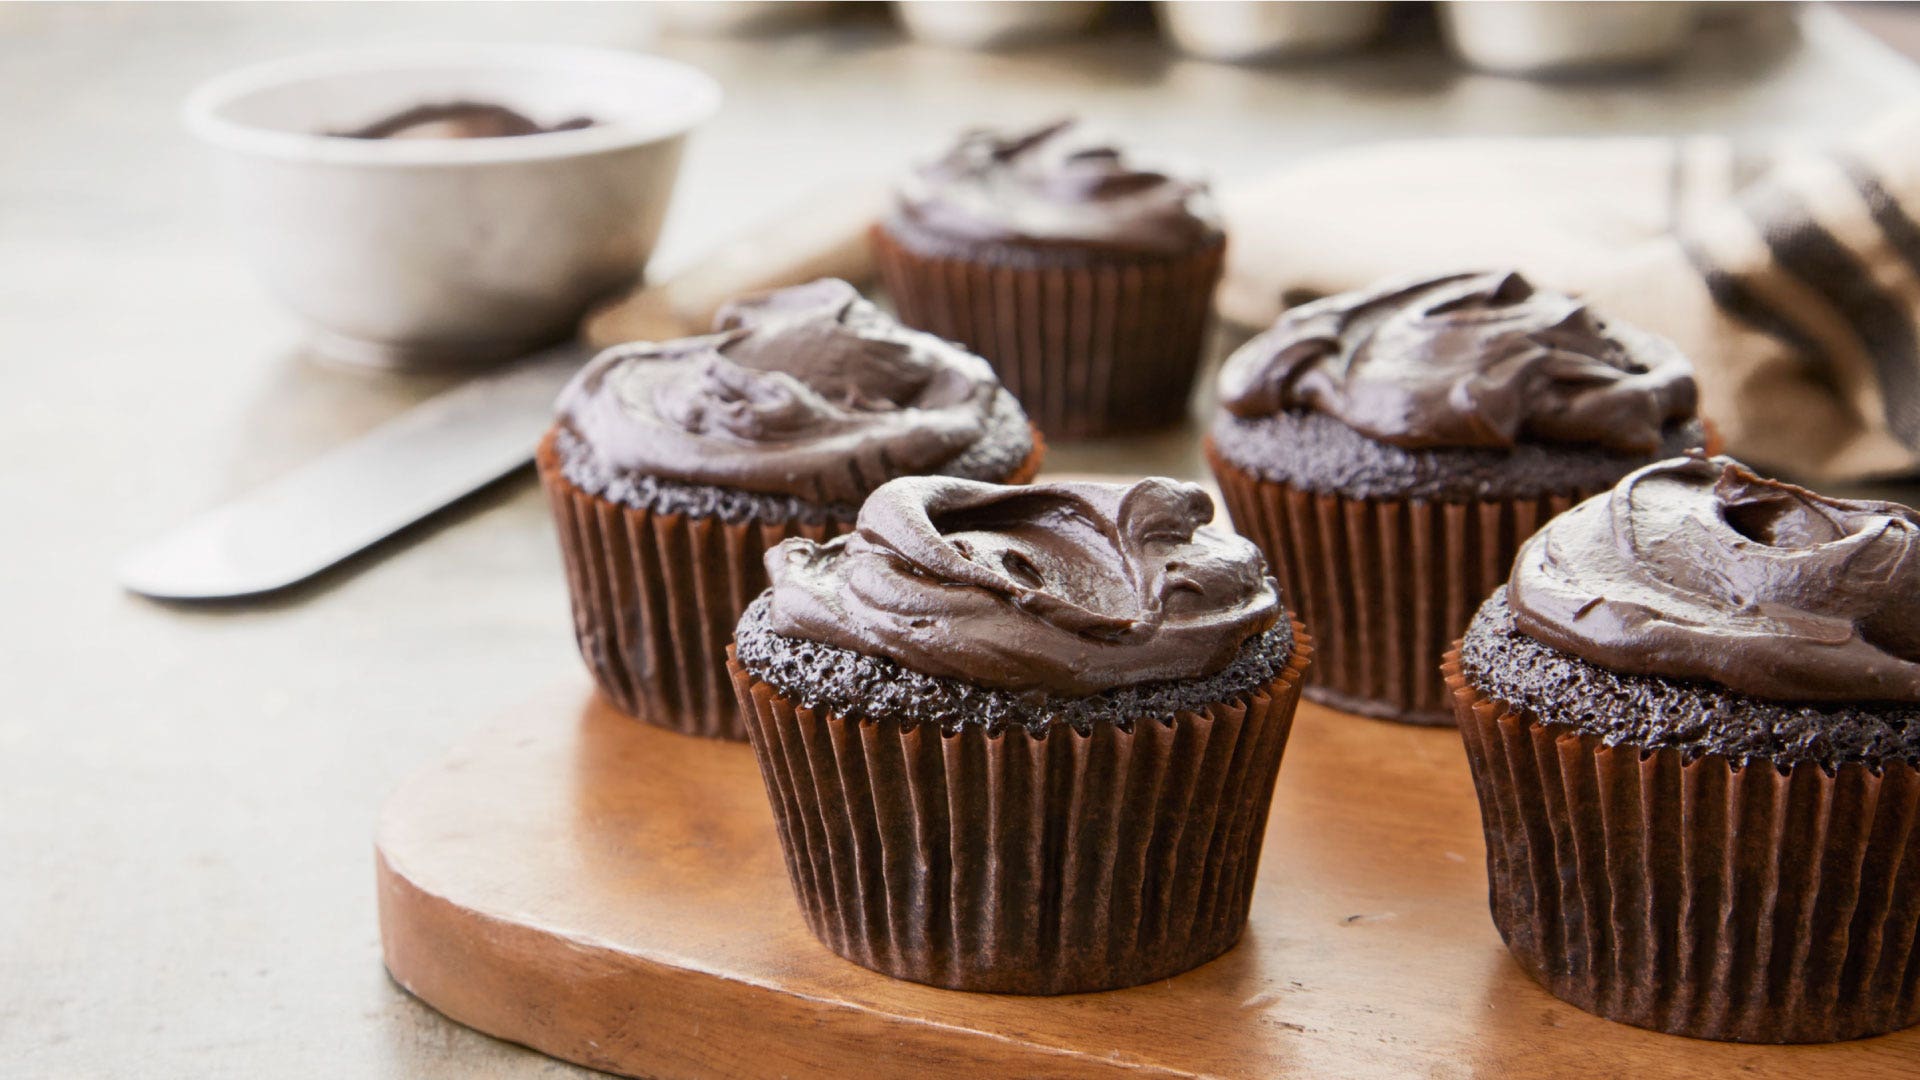 HERSHEY'S “Especially Dark” Chocolate Cupcakes